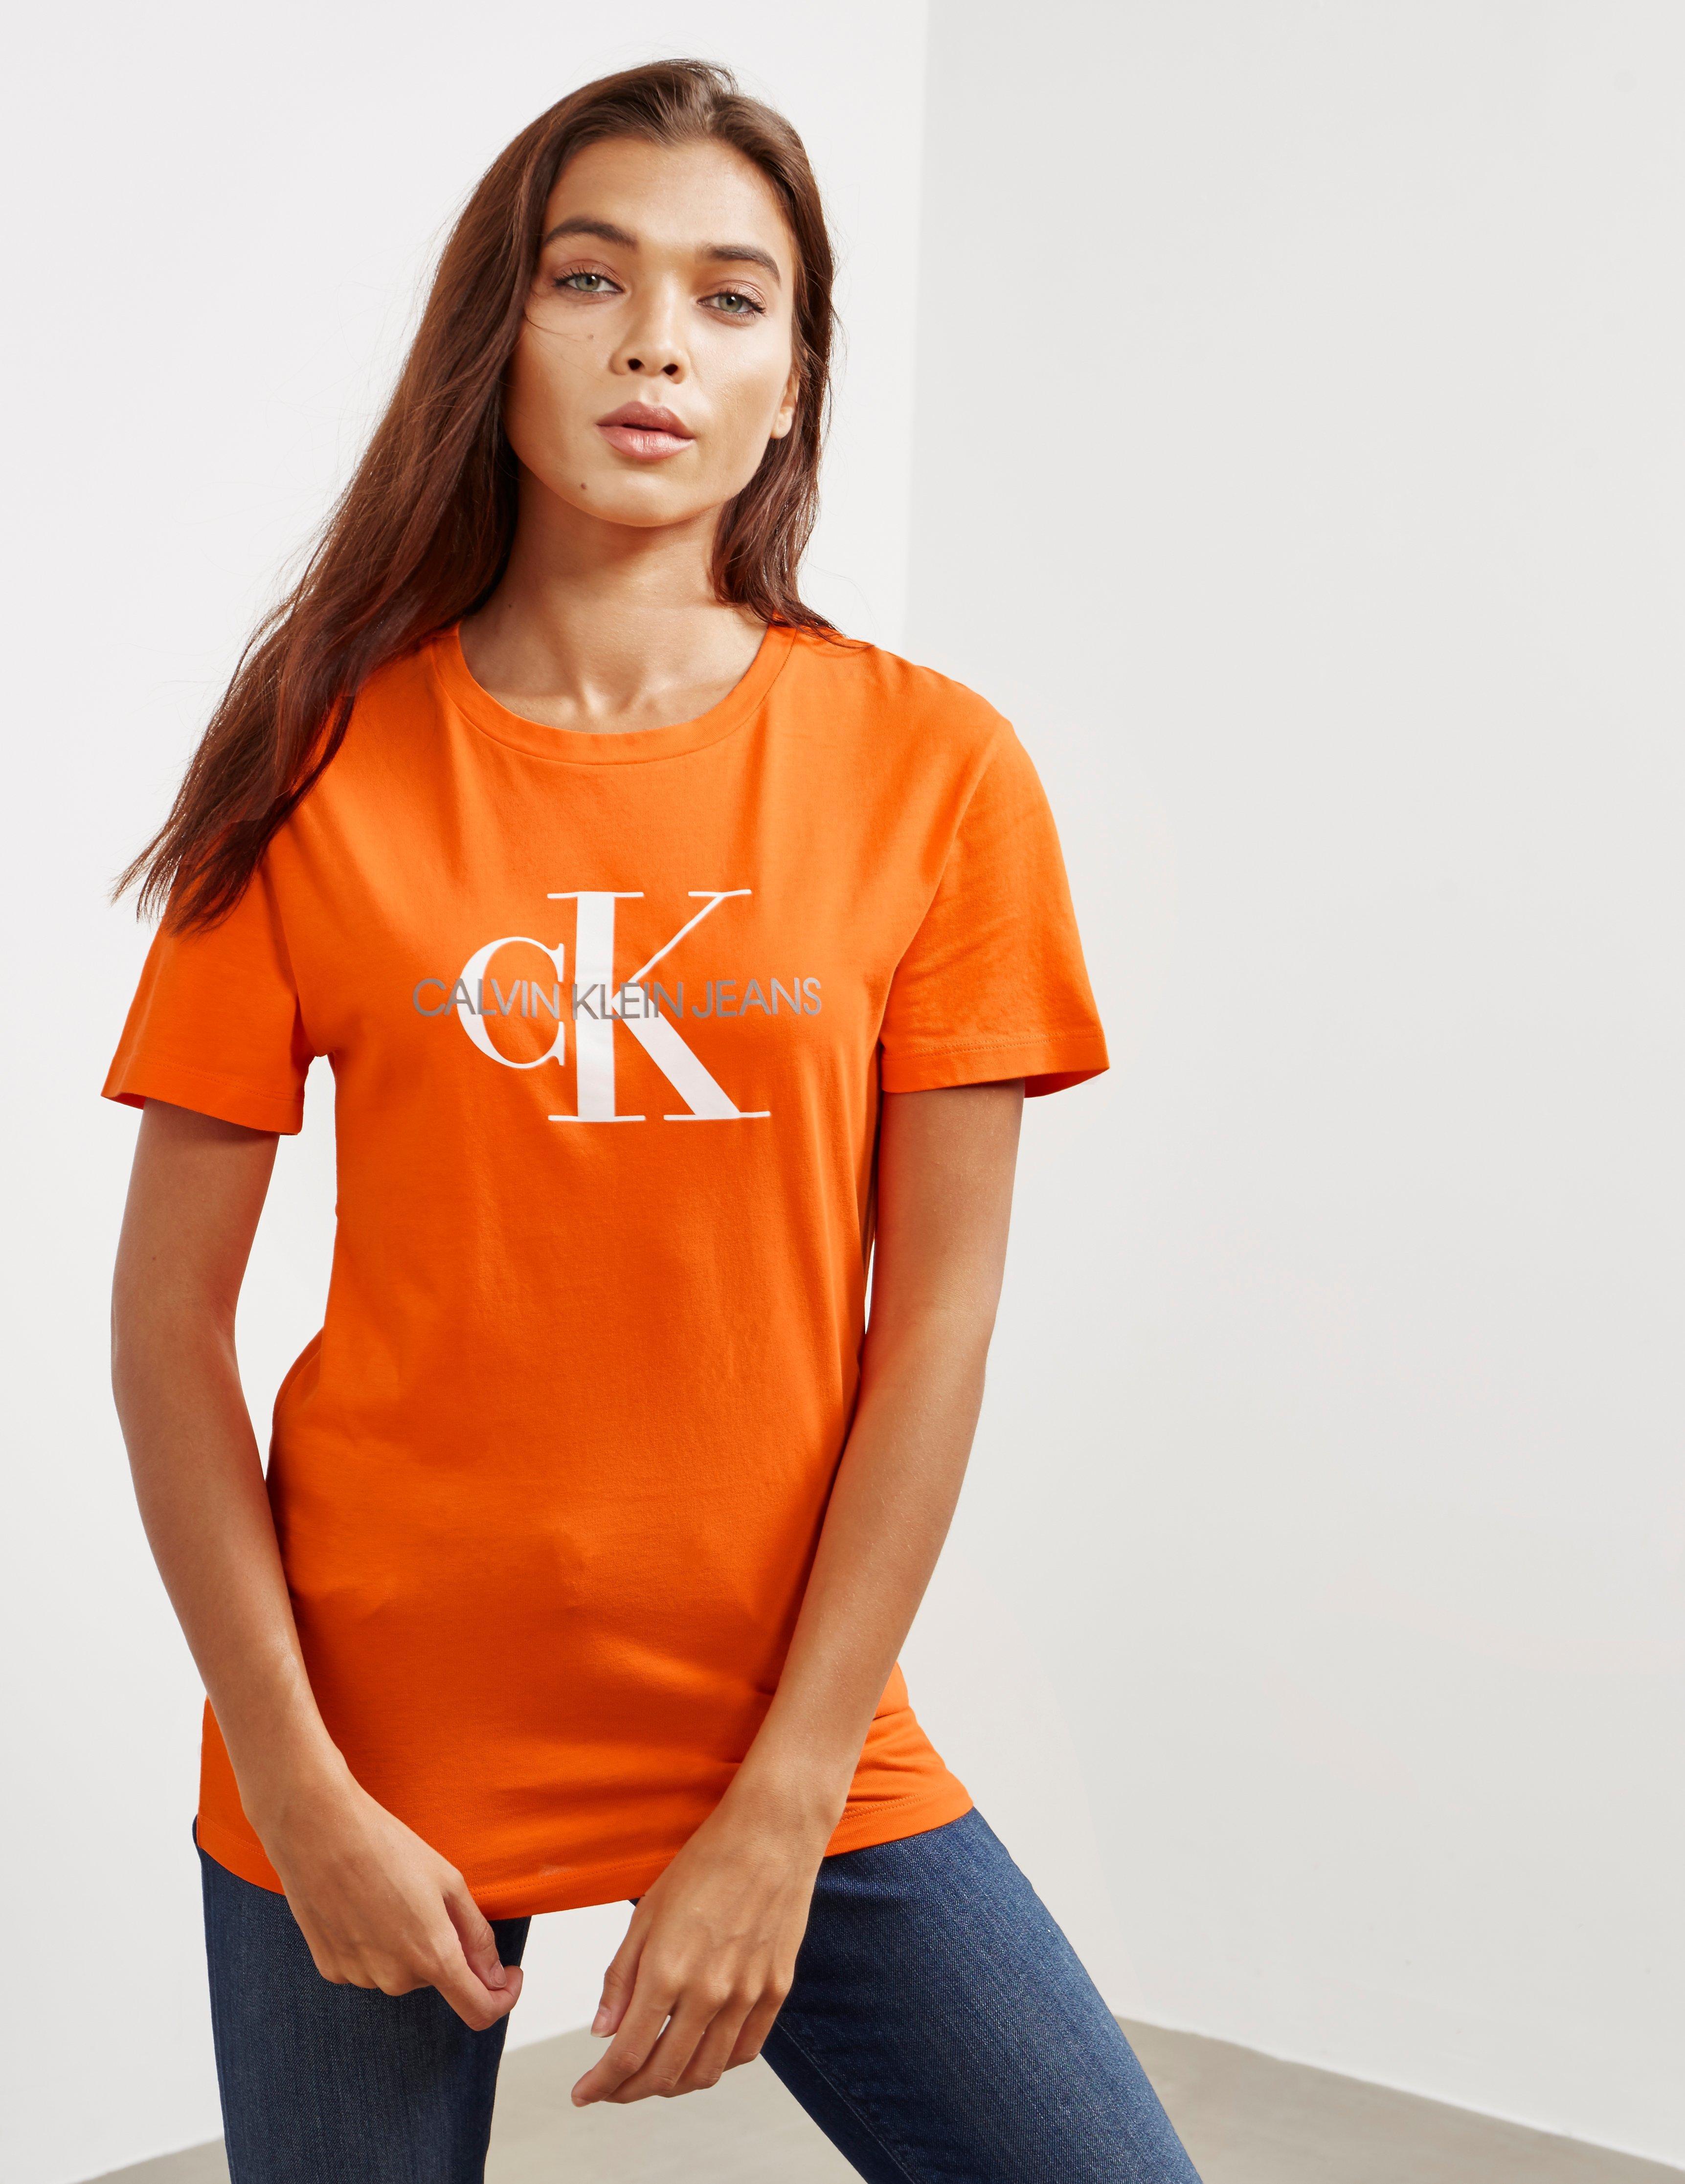 Calvin Klein Orange Shirt Clearance, 50% OFF 